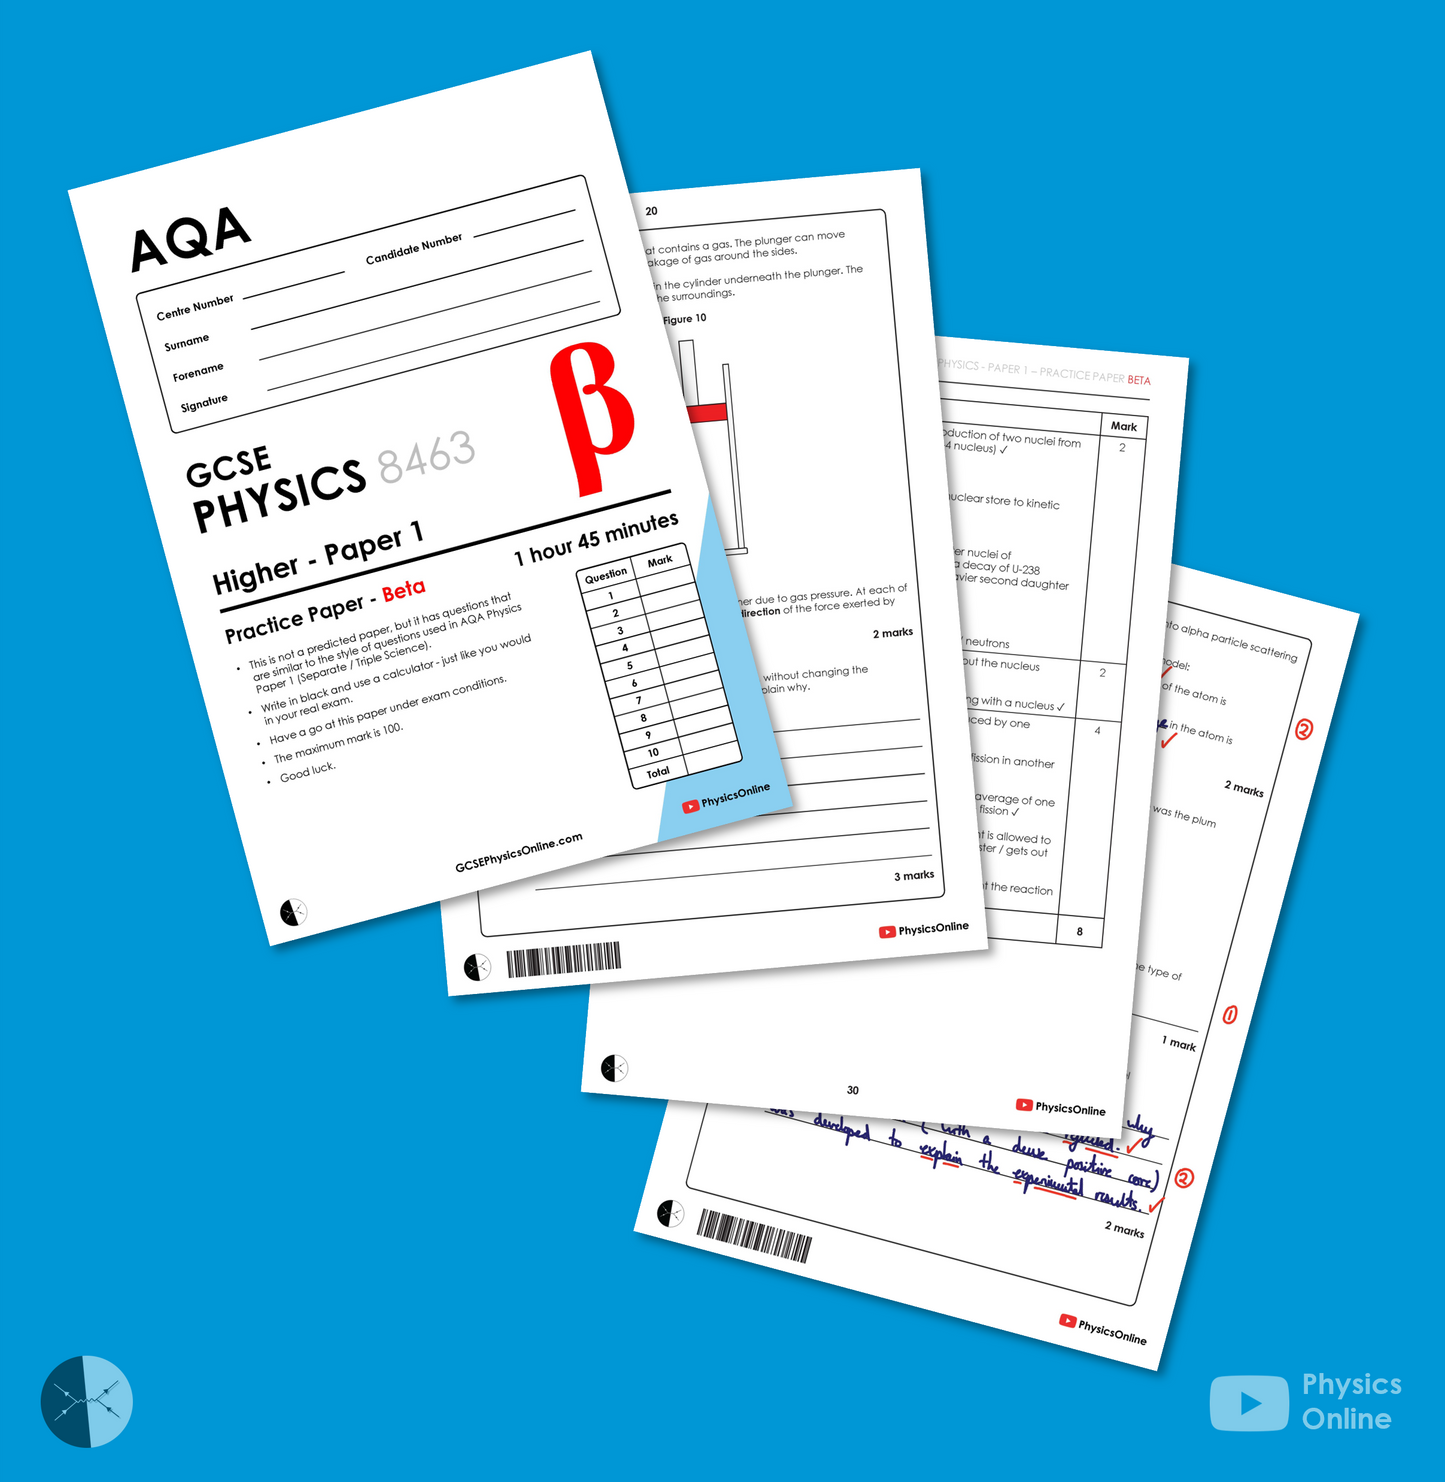 AQA Practice Paper | Paper 1 - Beta | Teacher Issue | GCSE Physics